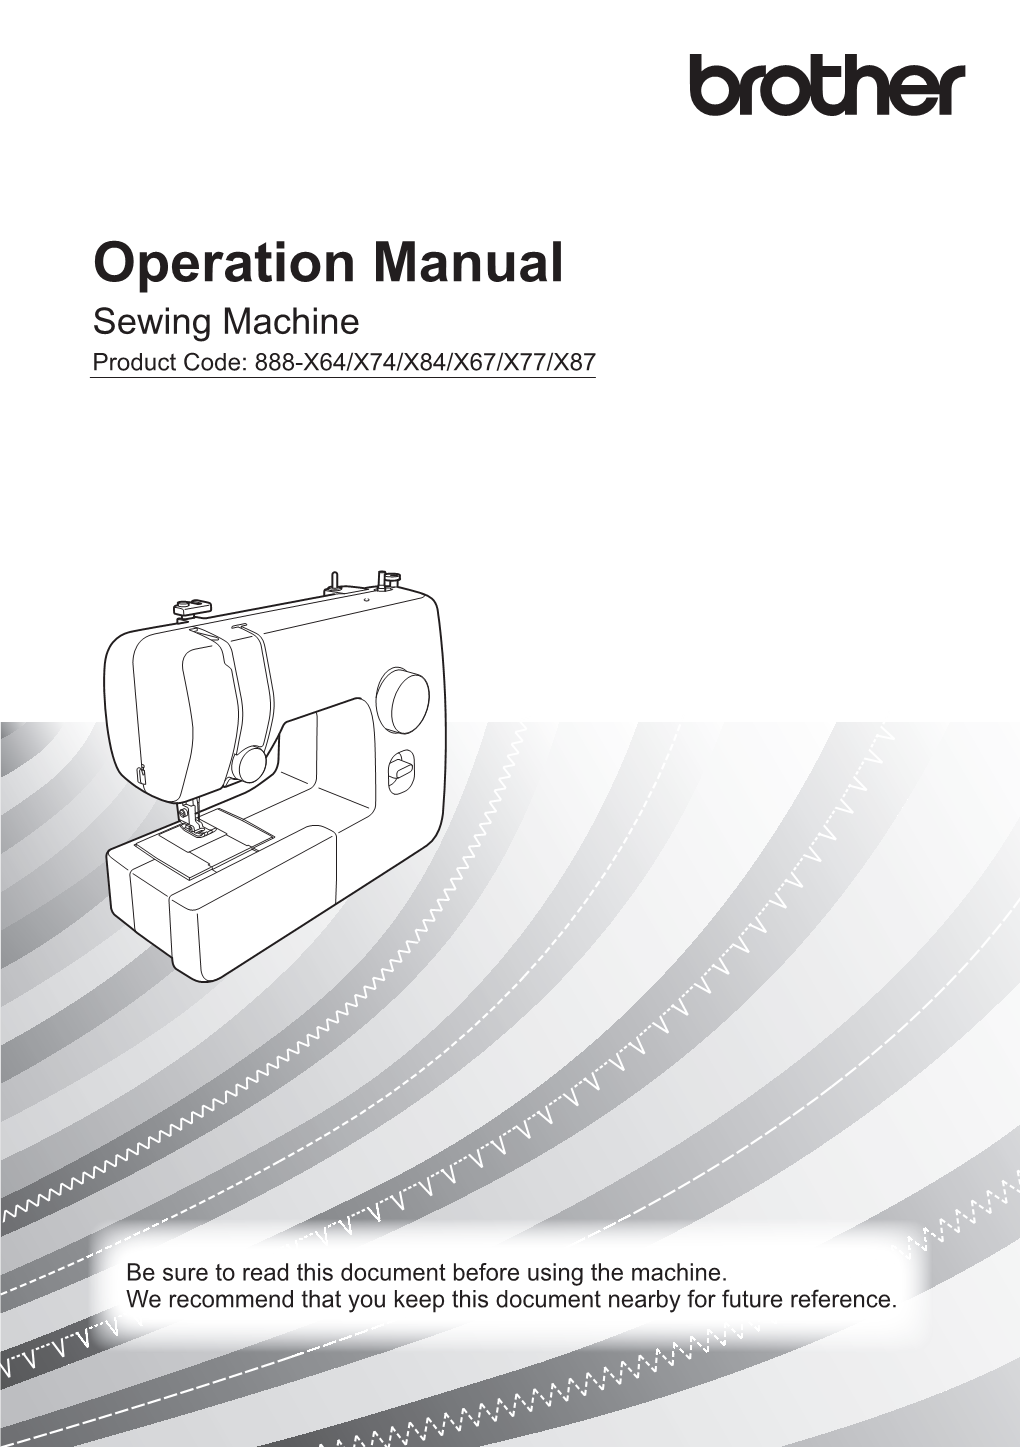 Operation Manual Sewing Machine Product Code: 888-X64/X74/X84/X67/X77/X87